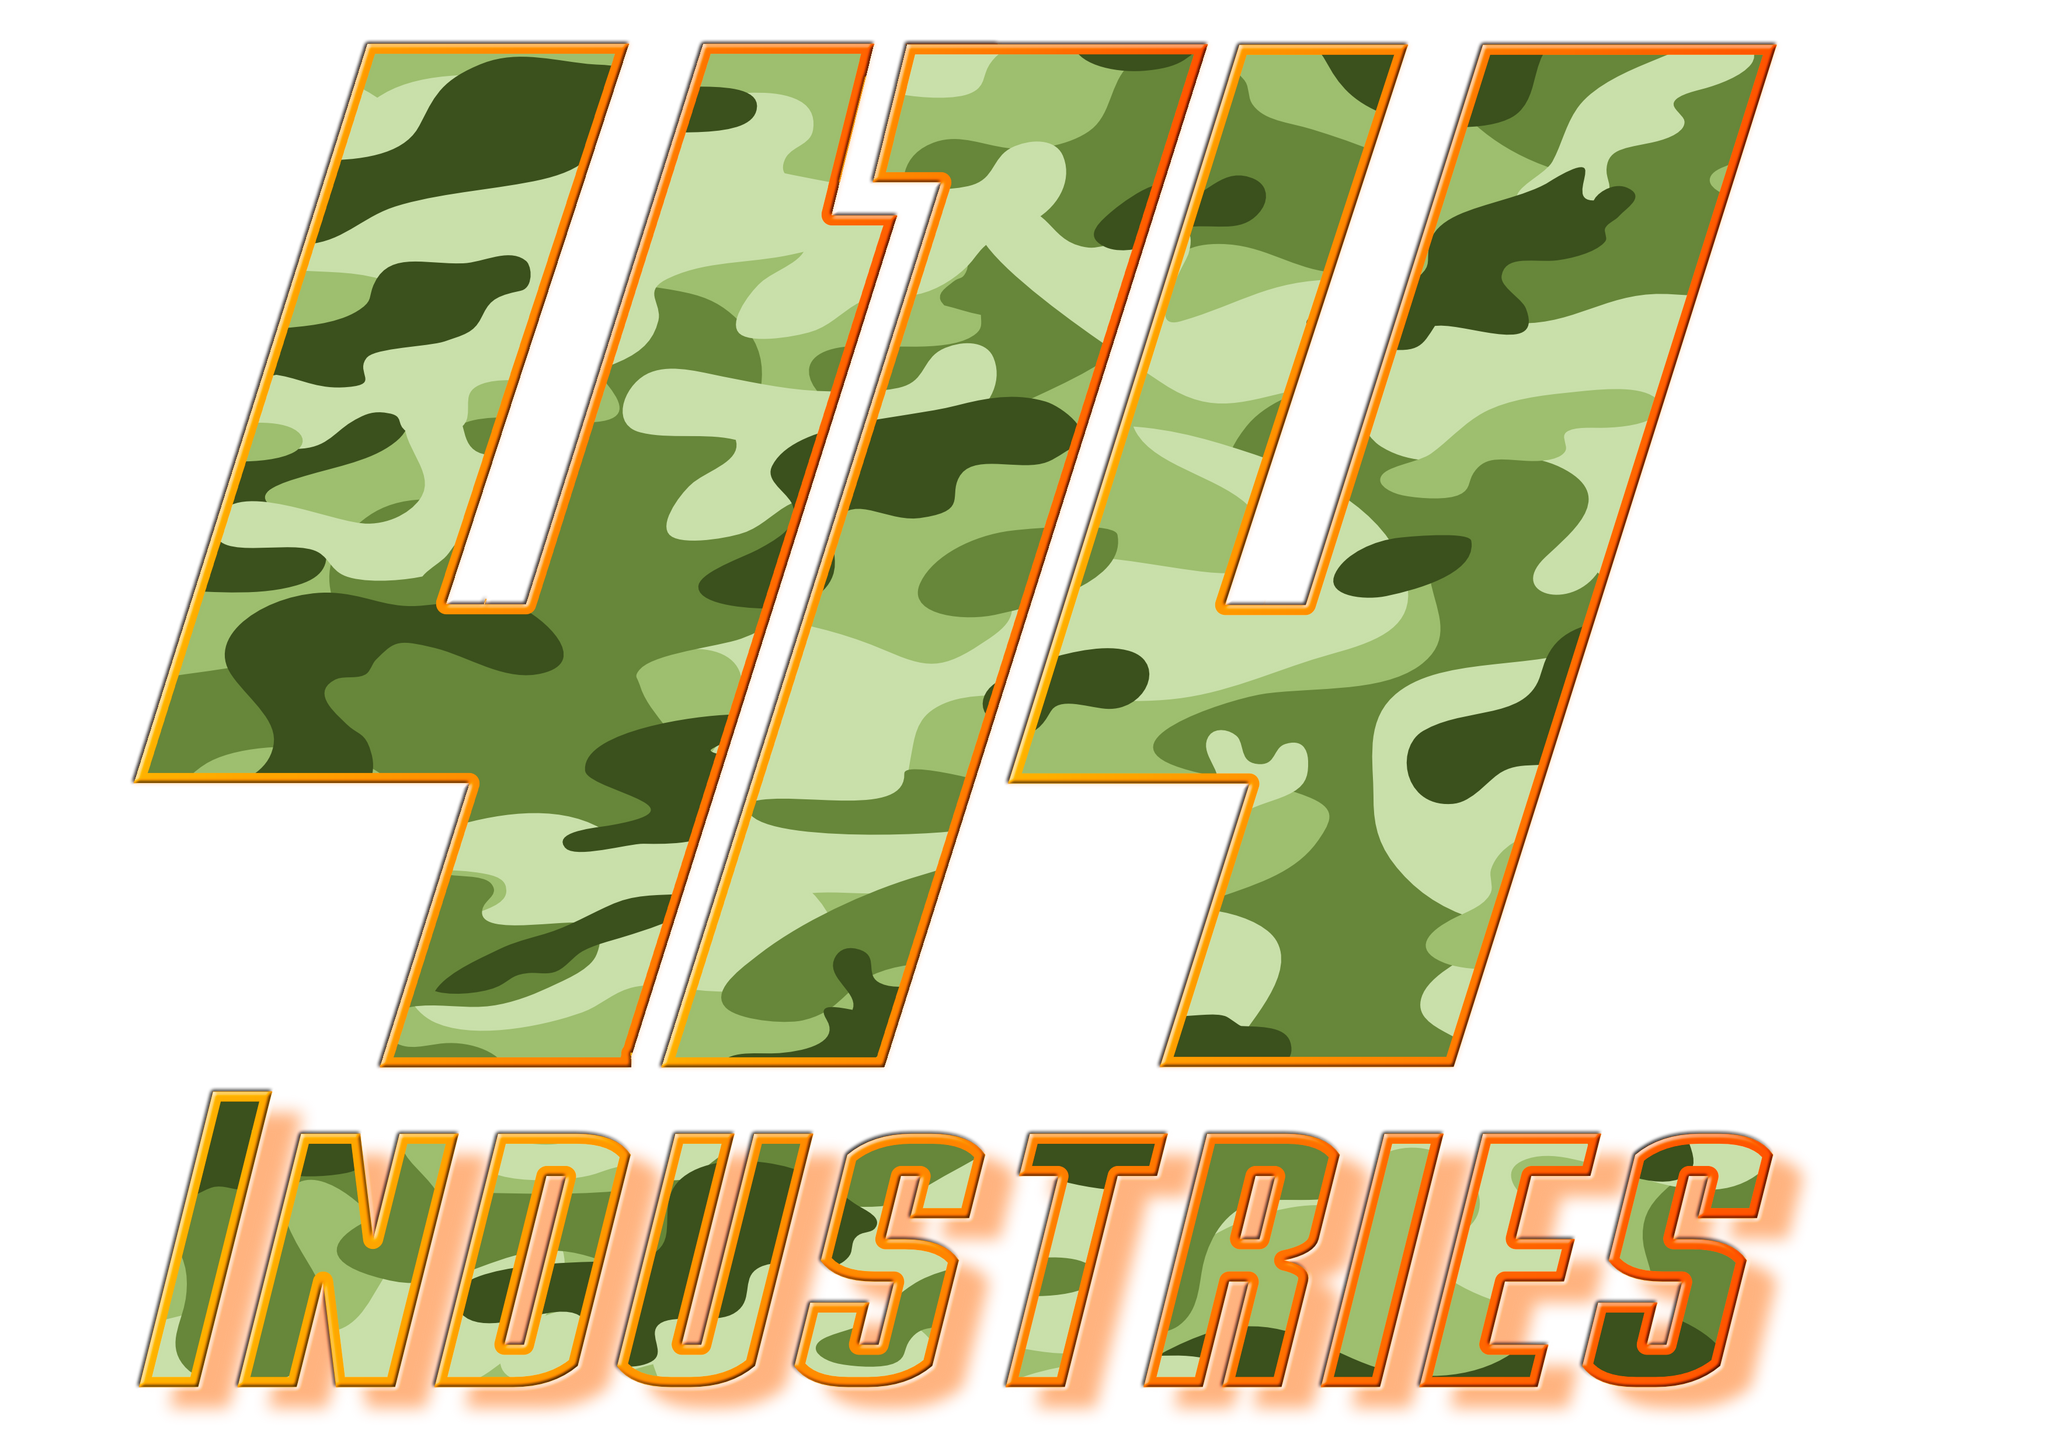 Camouflage 414 Industries logo tee